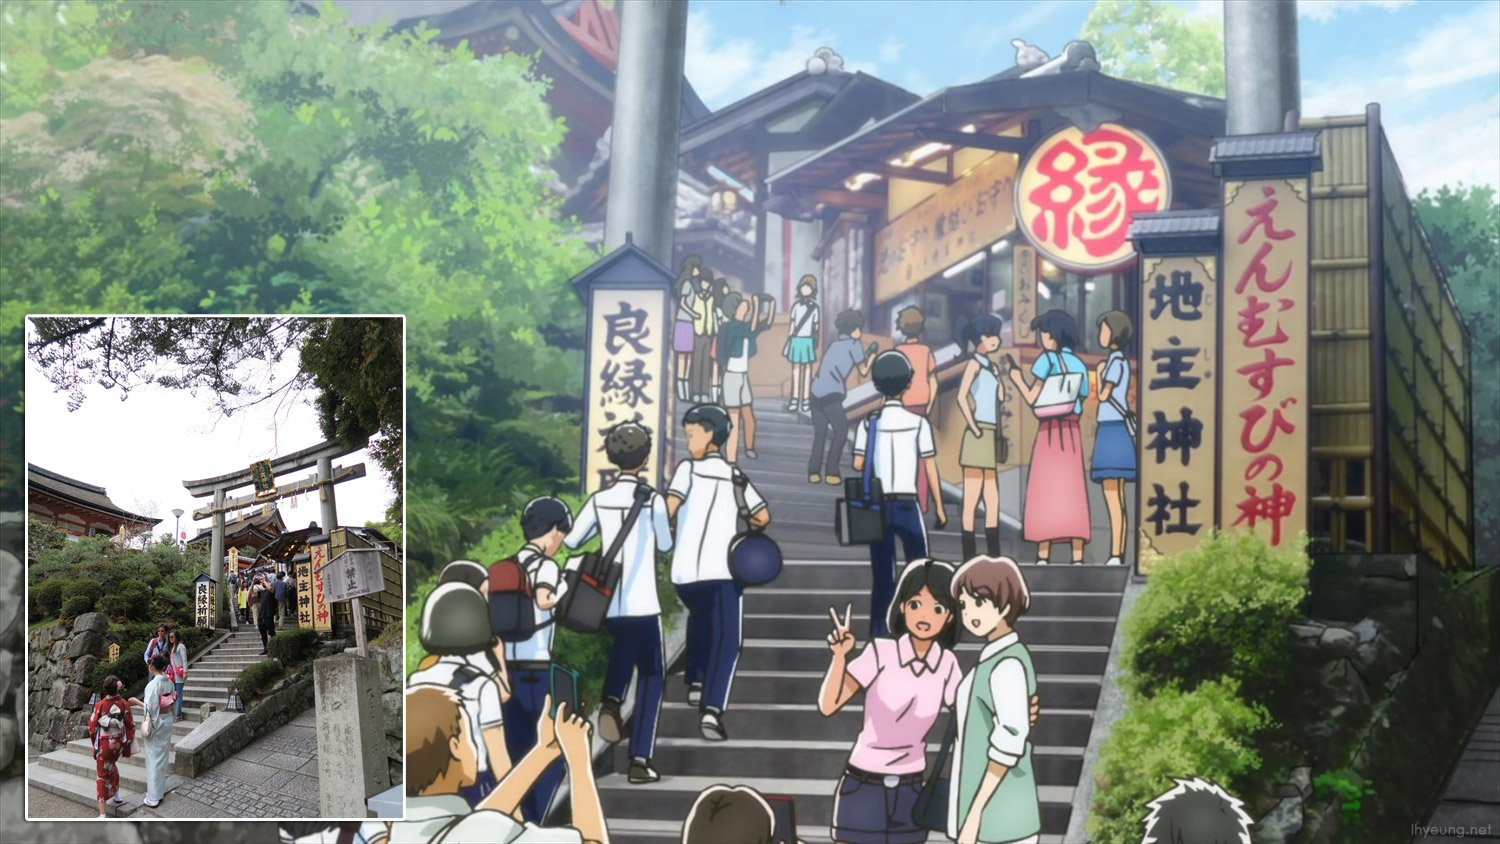 48+] Japanese Anime Street 1080p Wallpapers - WallpaperSafari